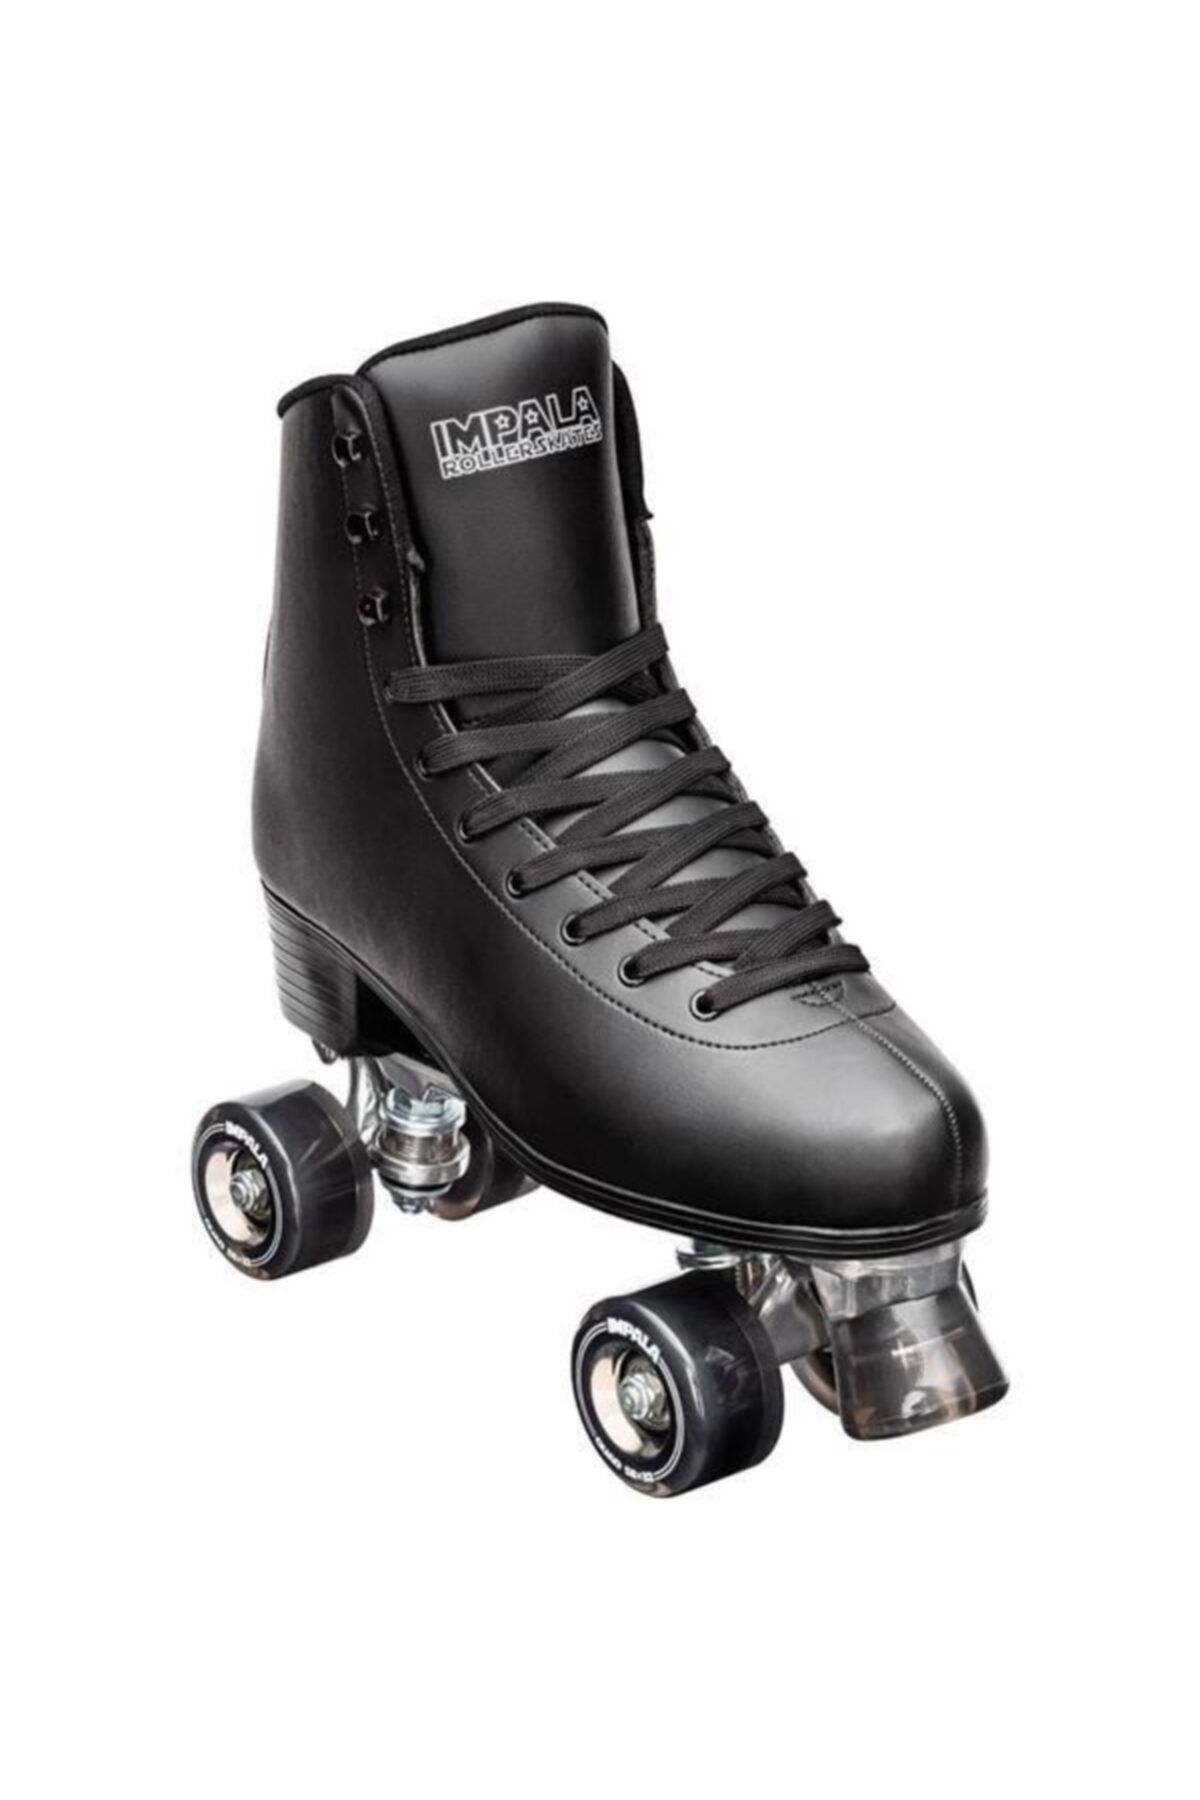 Impala Rollerskates Quad Skate Black Paten